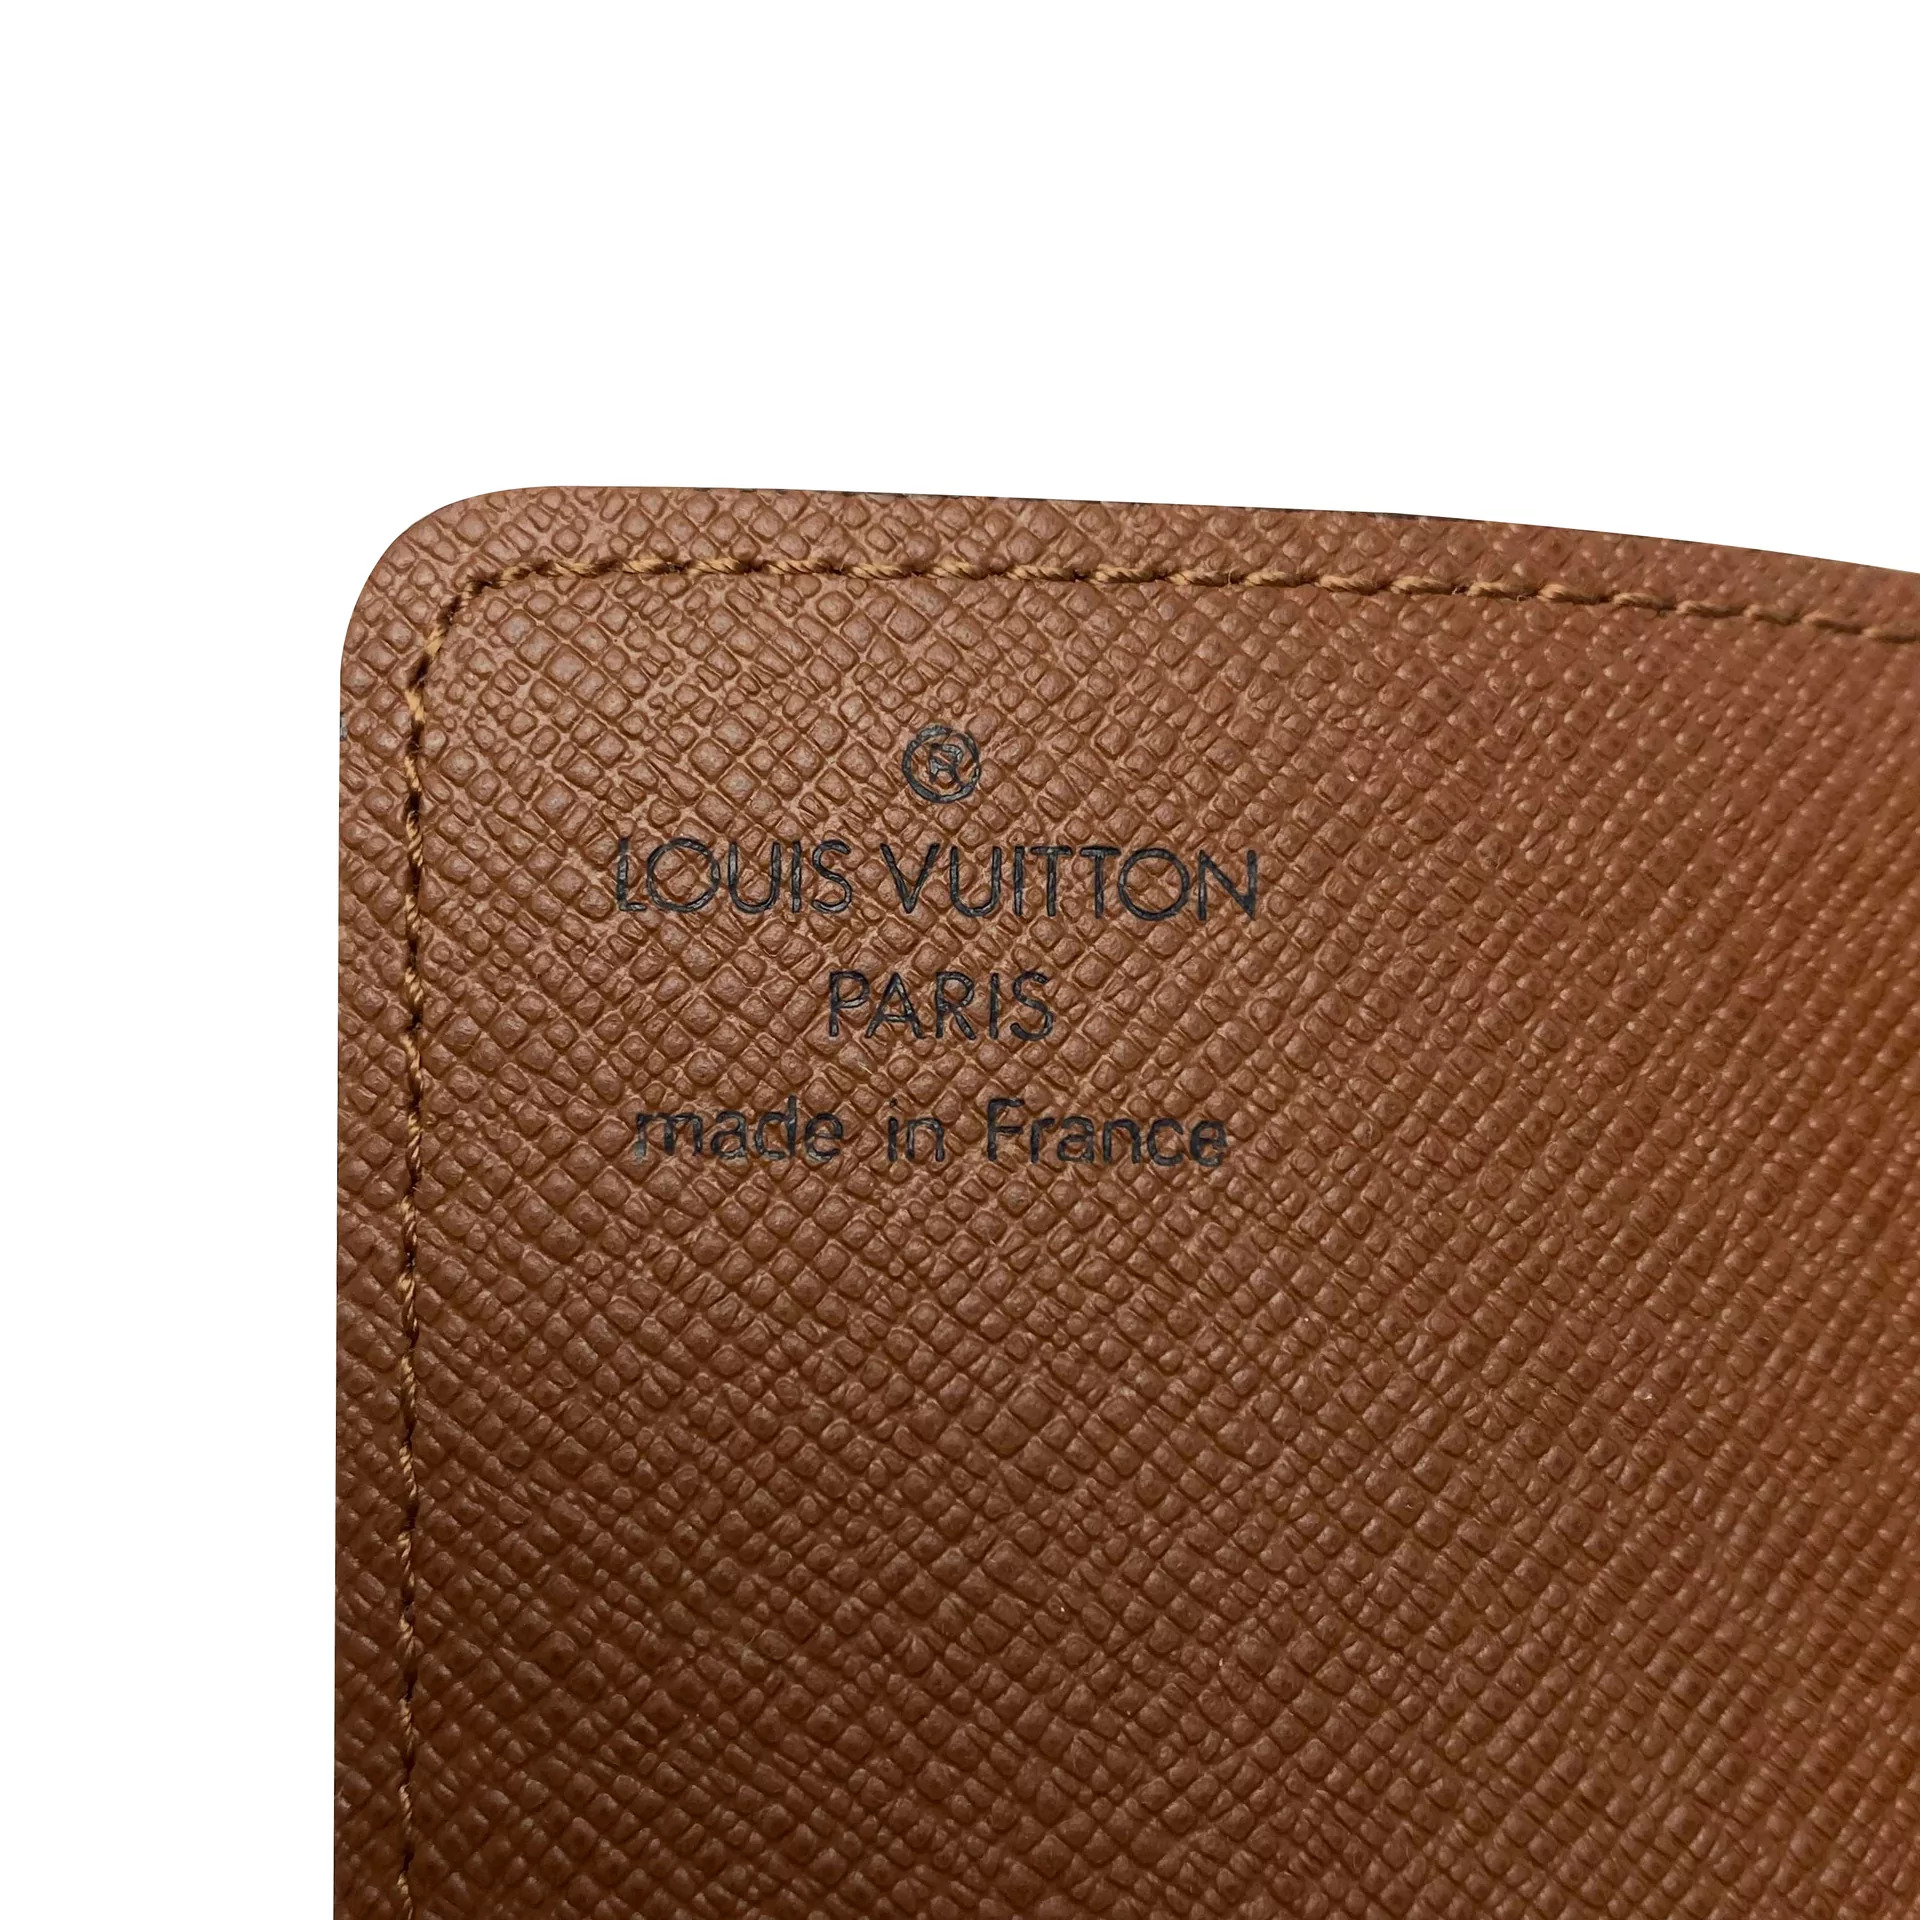 Porta-Cartões Louis Vuitton Monogram